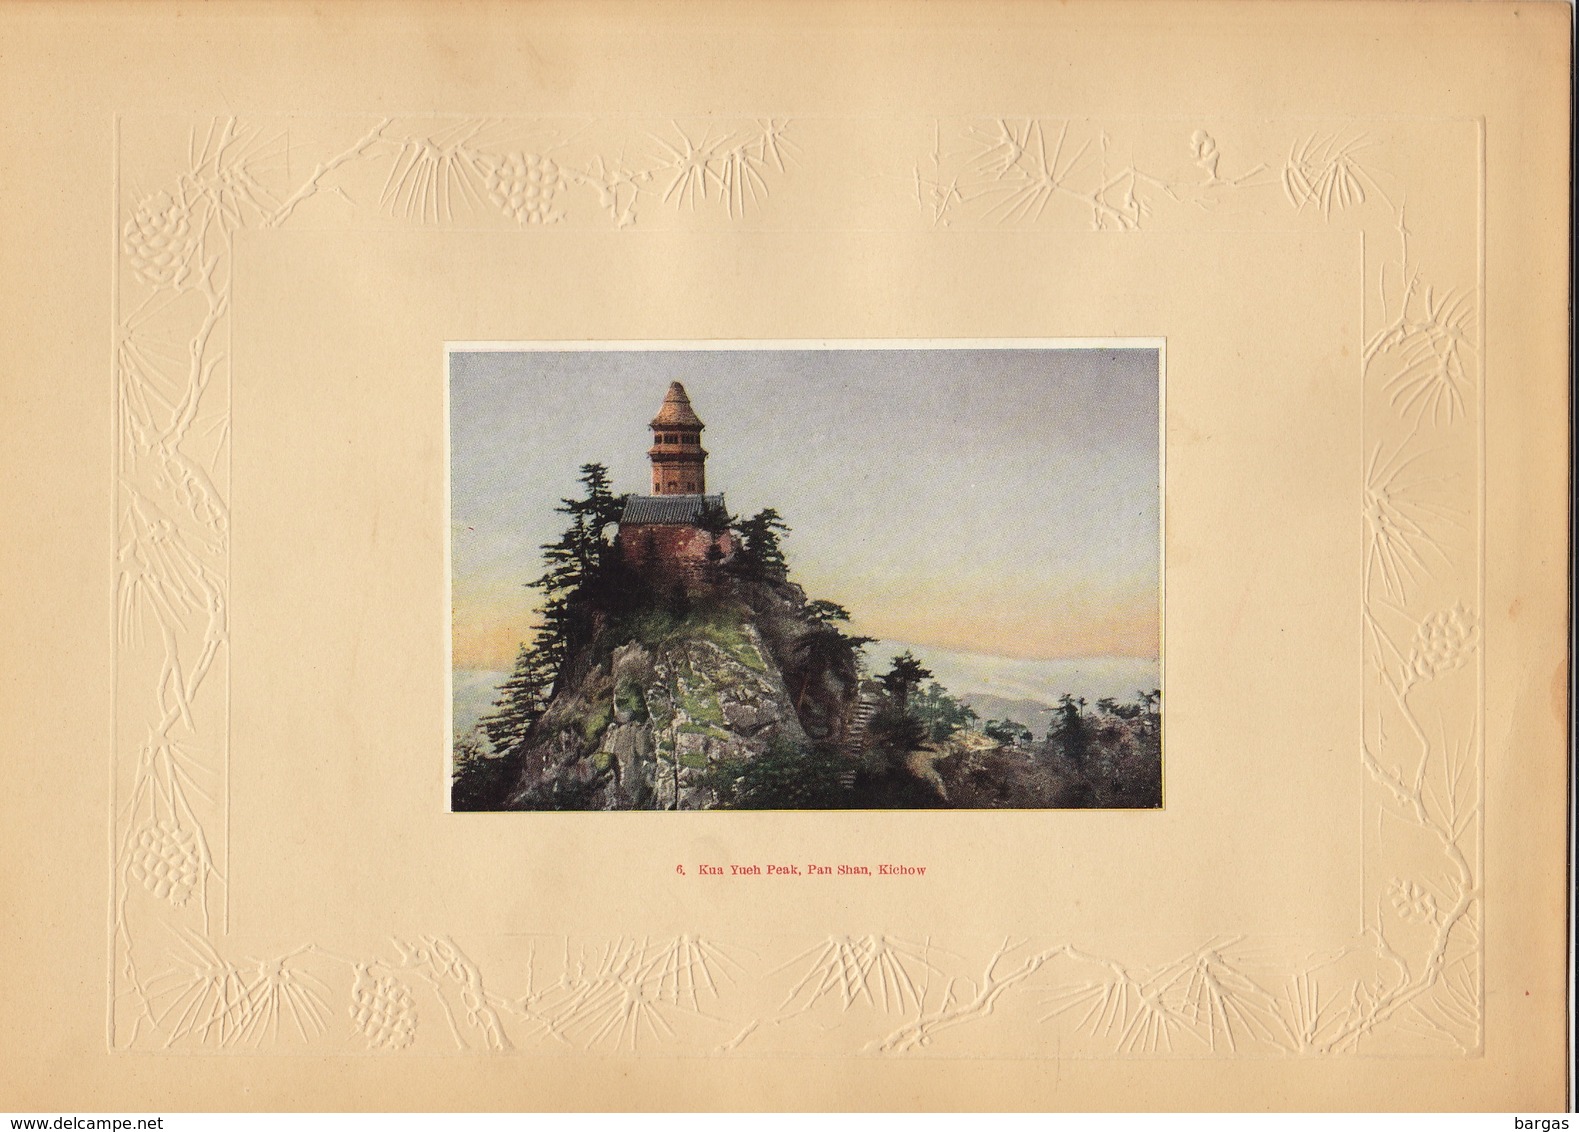 Planche Vers 1900 Lithographie Chine Kua Yueh Peak Pan Shuan Kichow China Chinois - Chinese Paper Cut